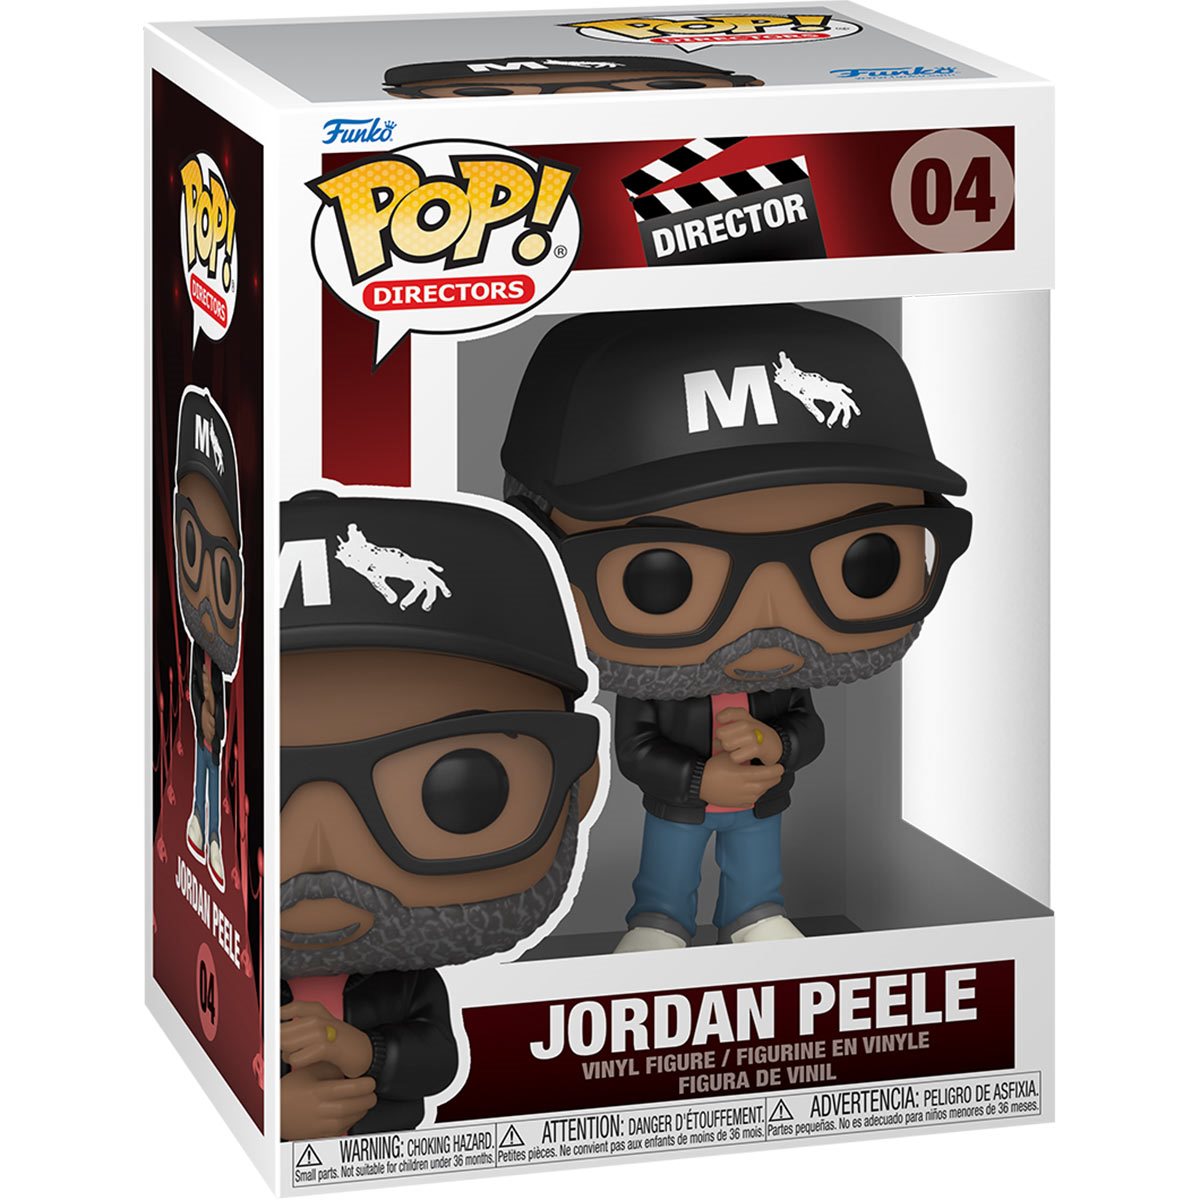 Jordan Peele Funko Pop! Directors #04 Vinyl Figure